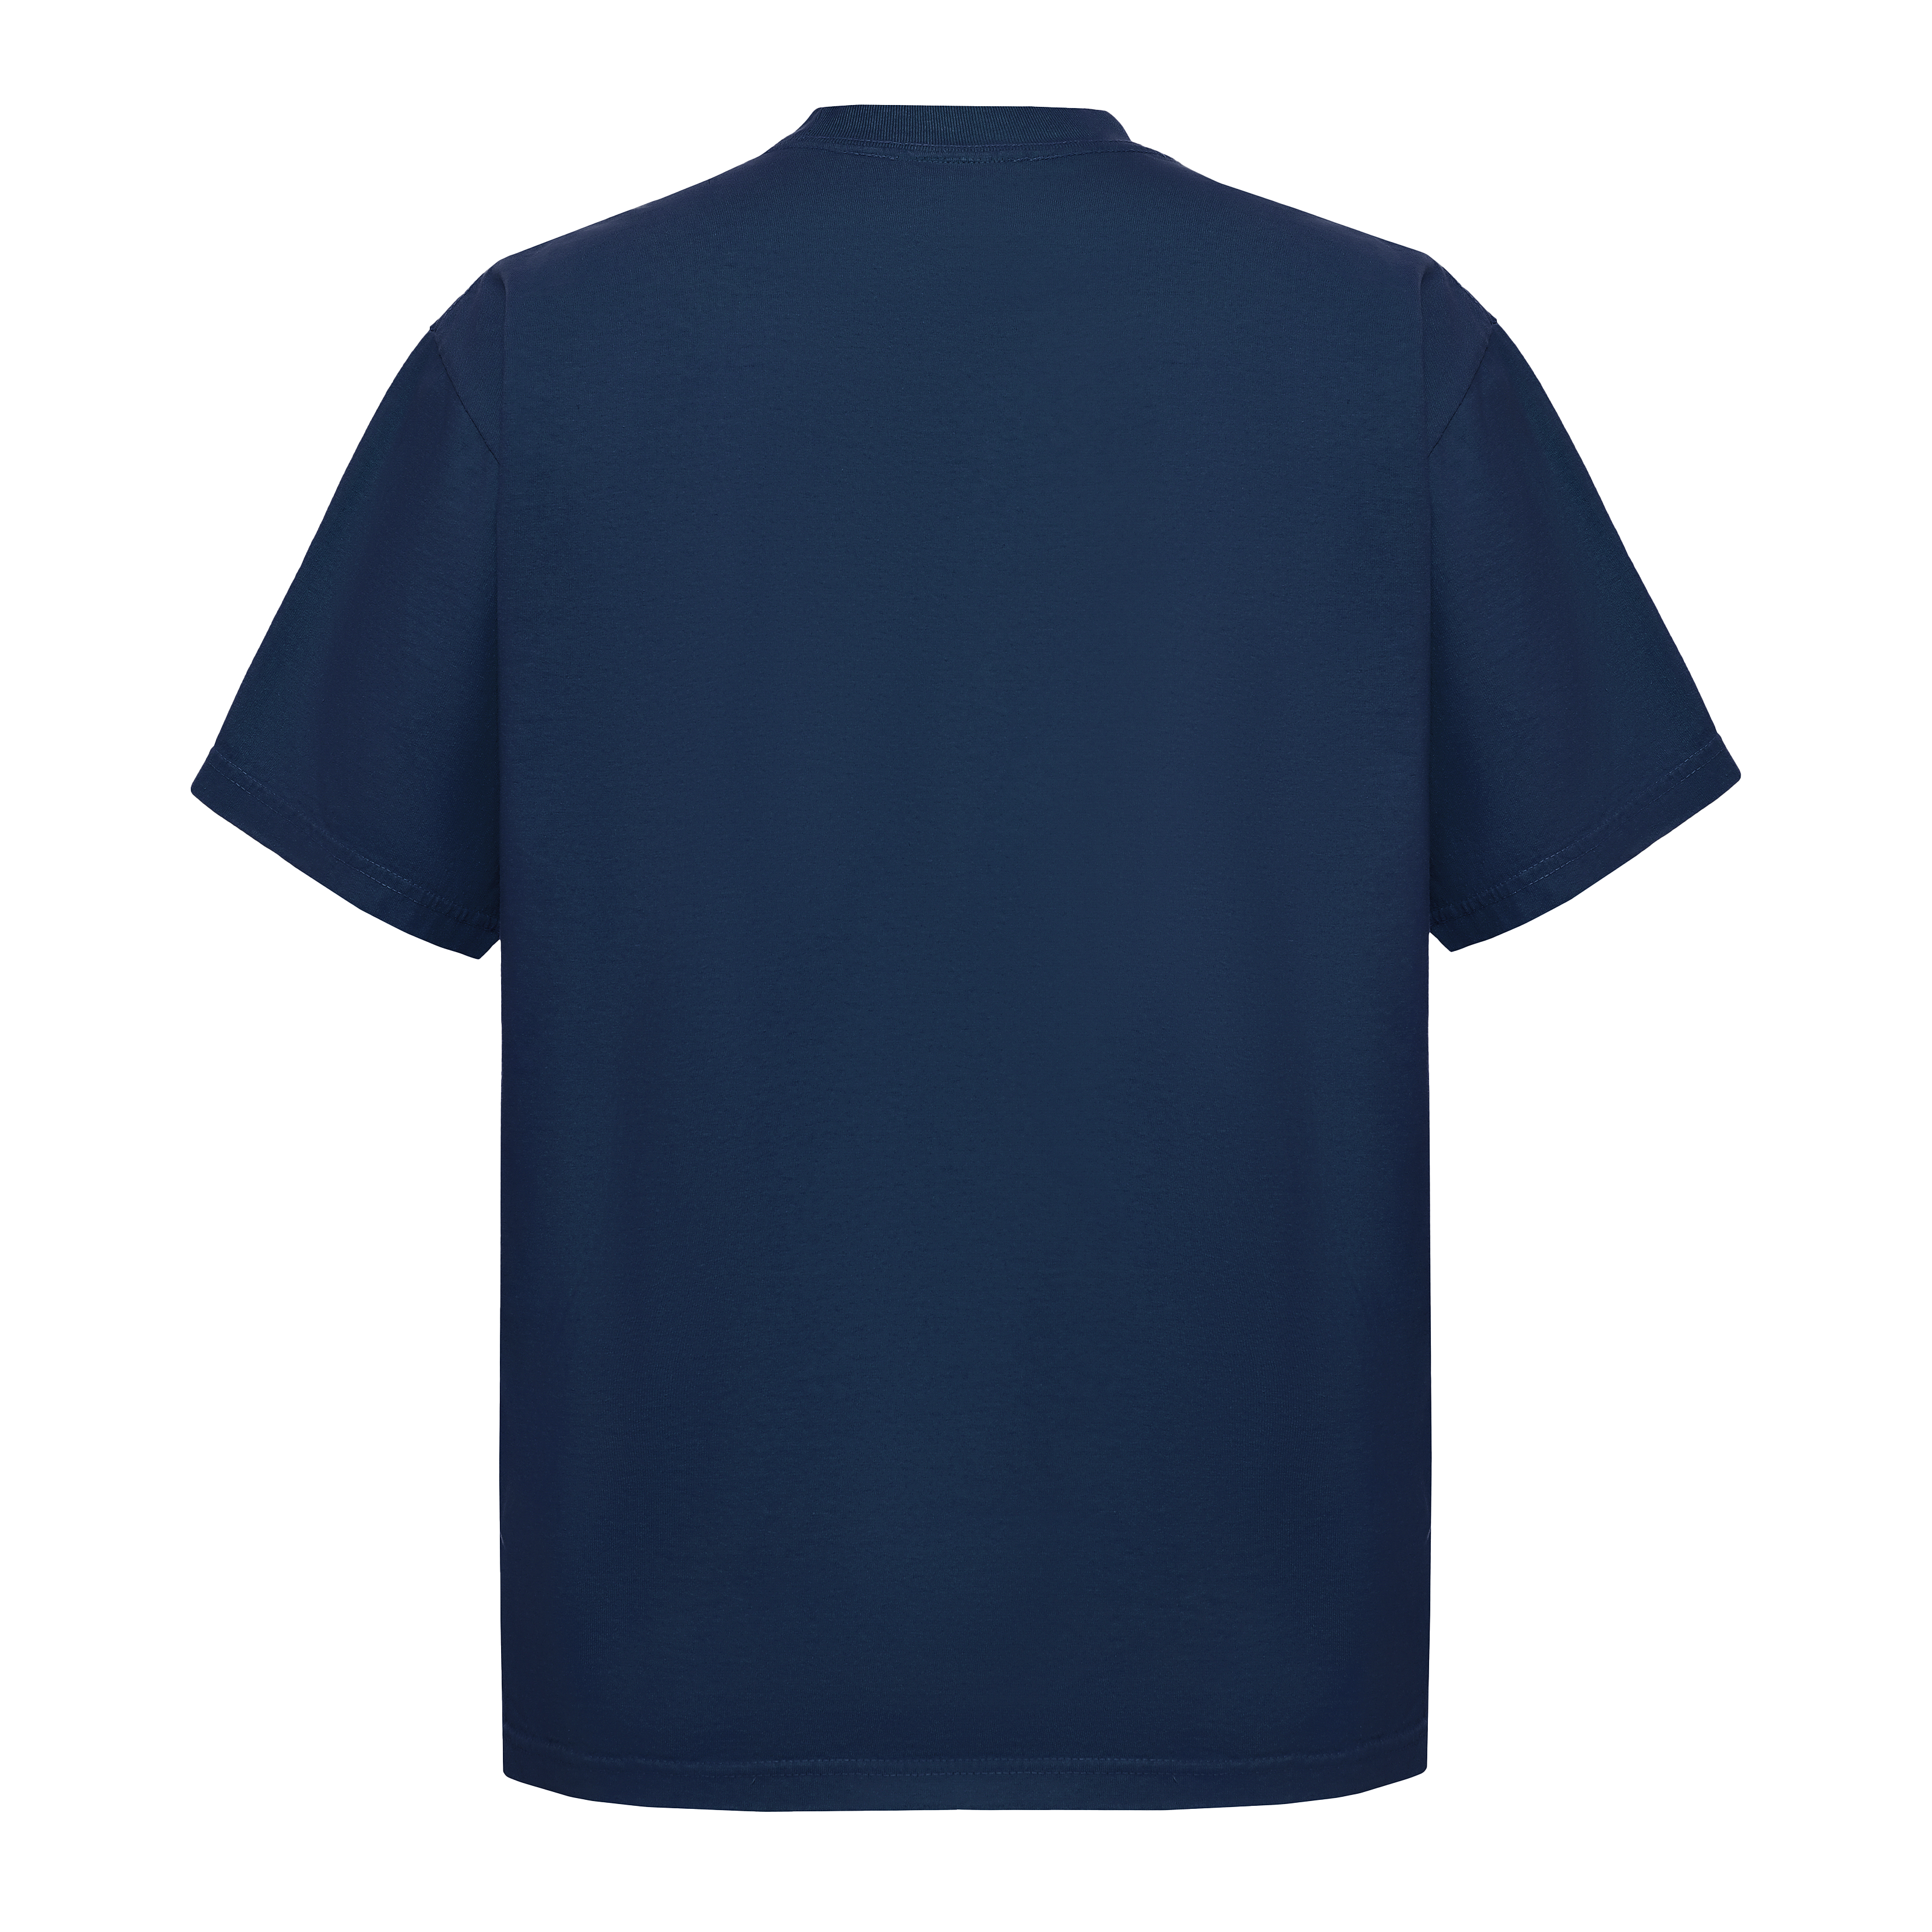 Garment Dye T-Shirt - Standard Size - Navy